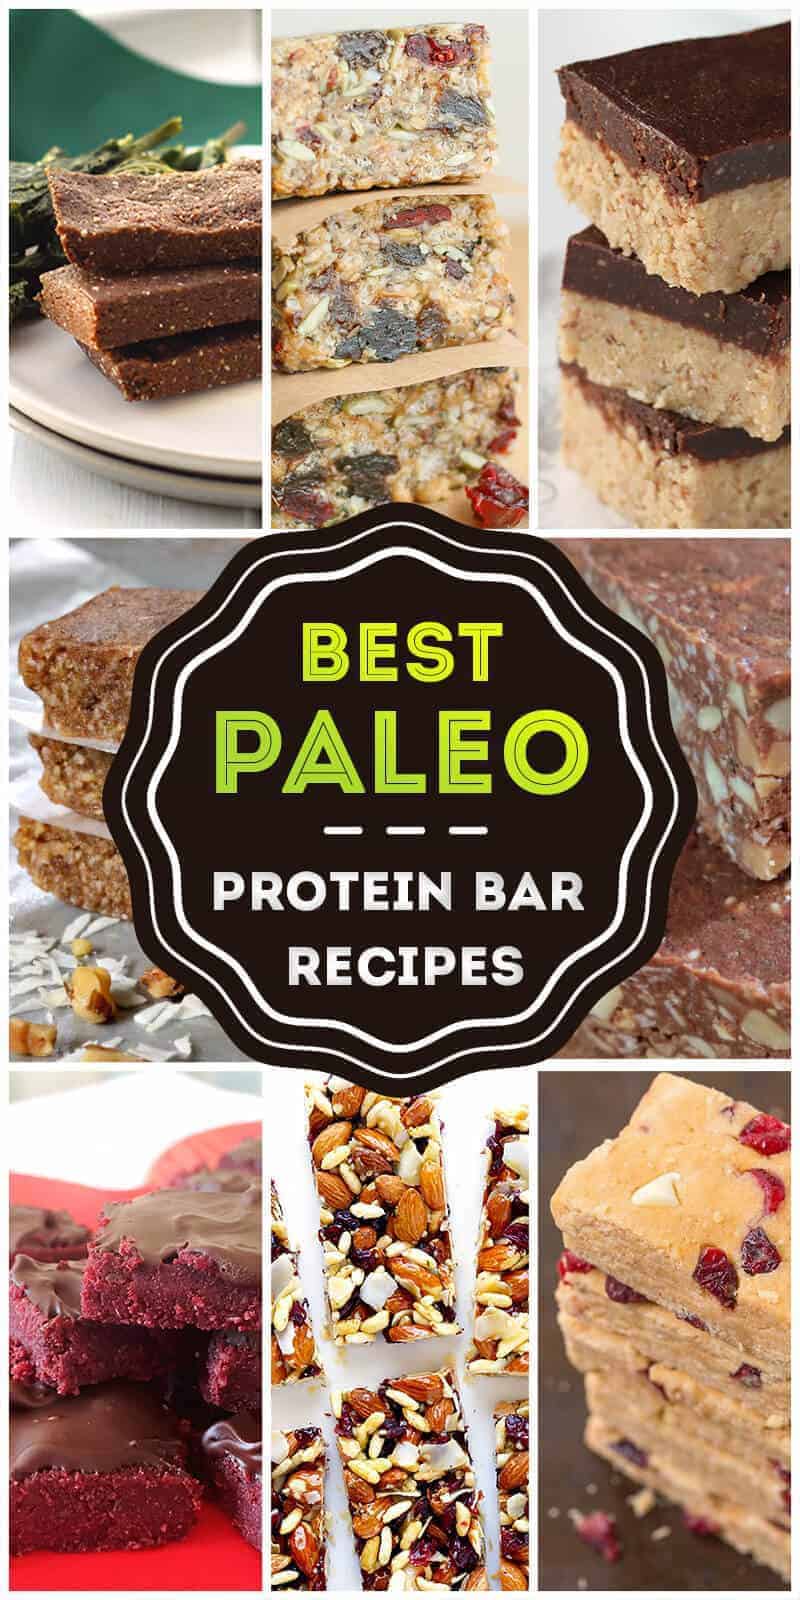 Best Paleo Protein Bar Recipes